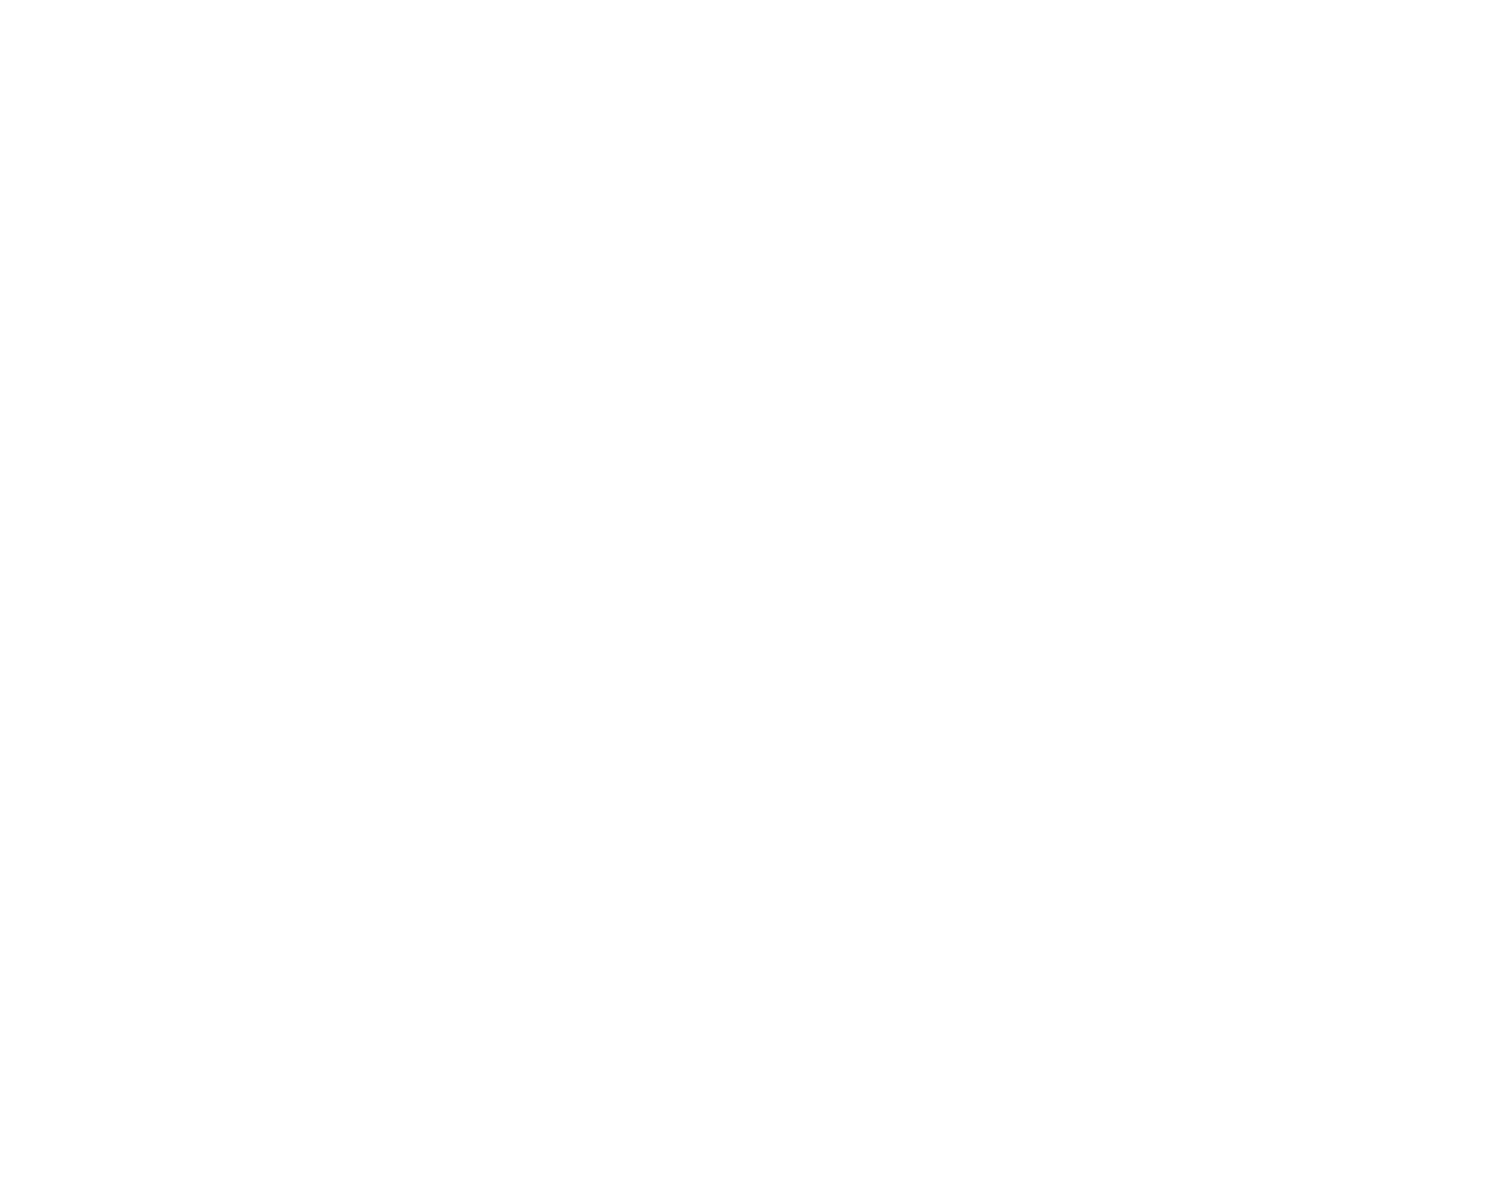 The Magnolia Foundation